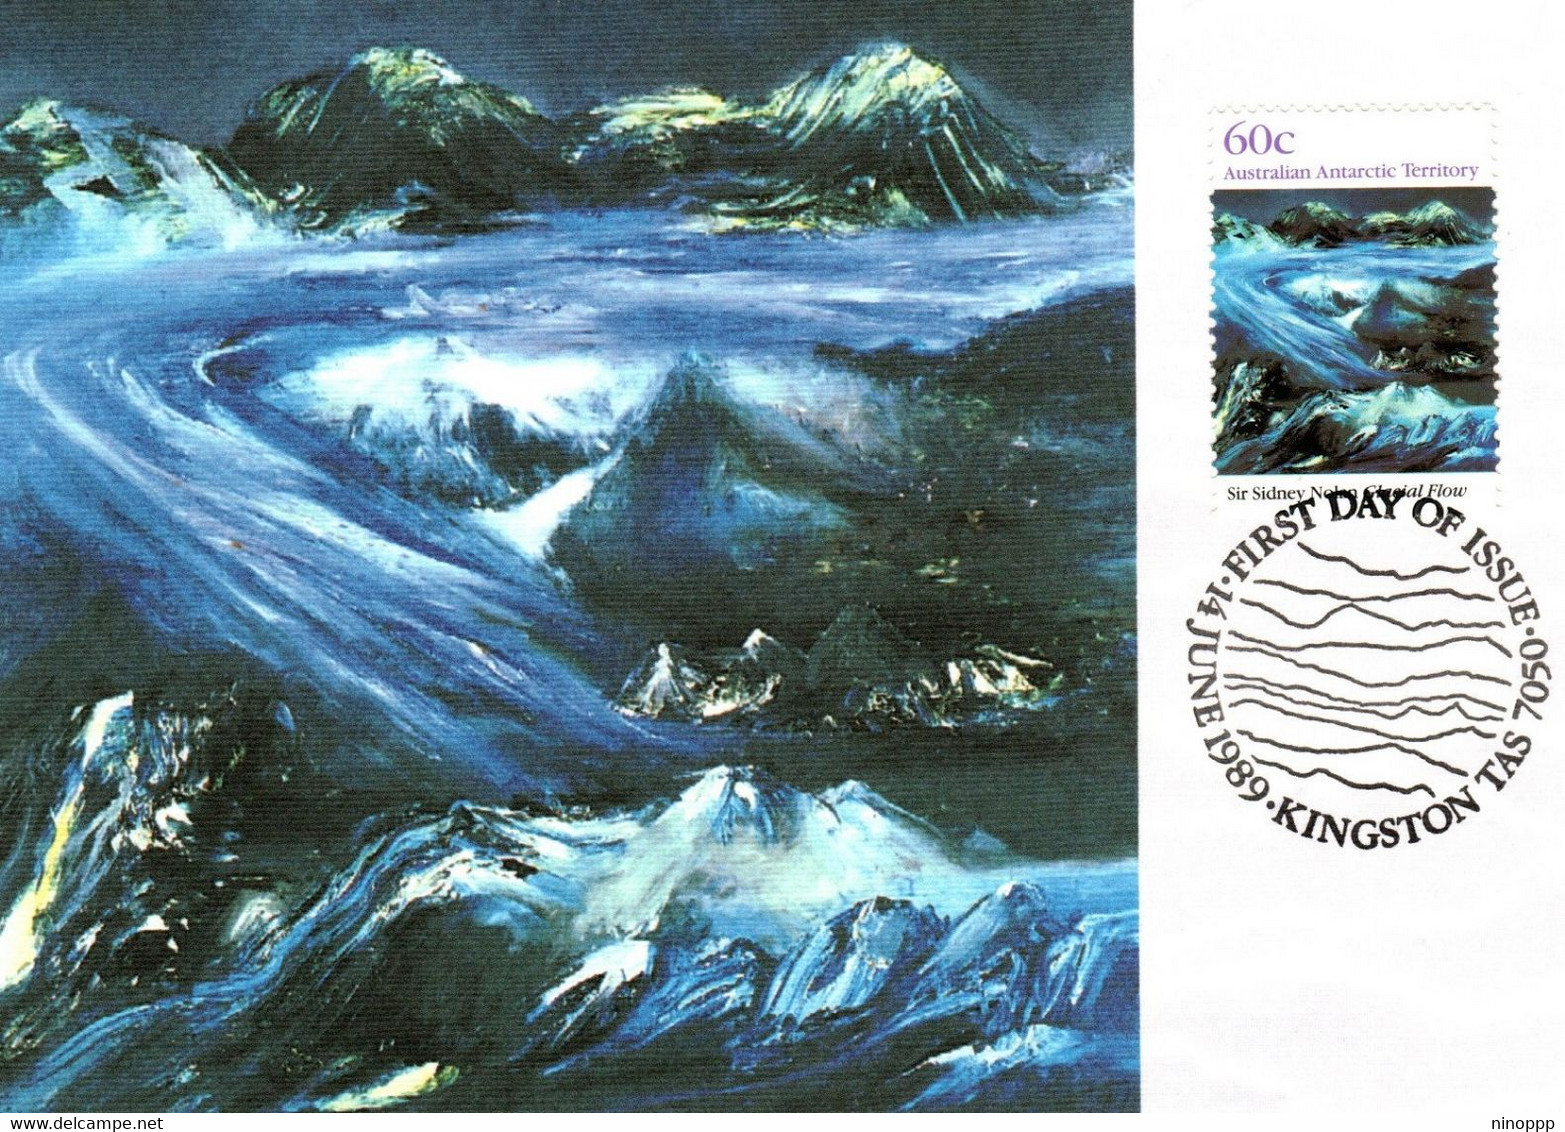 Australian Antarctic Territory 1989 Landscapes,Glacial Flow,maximum Card - Maximumkarten